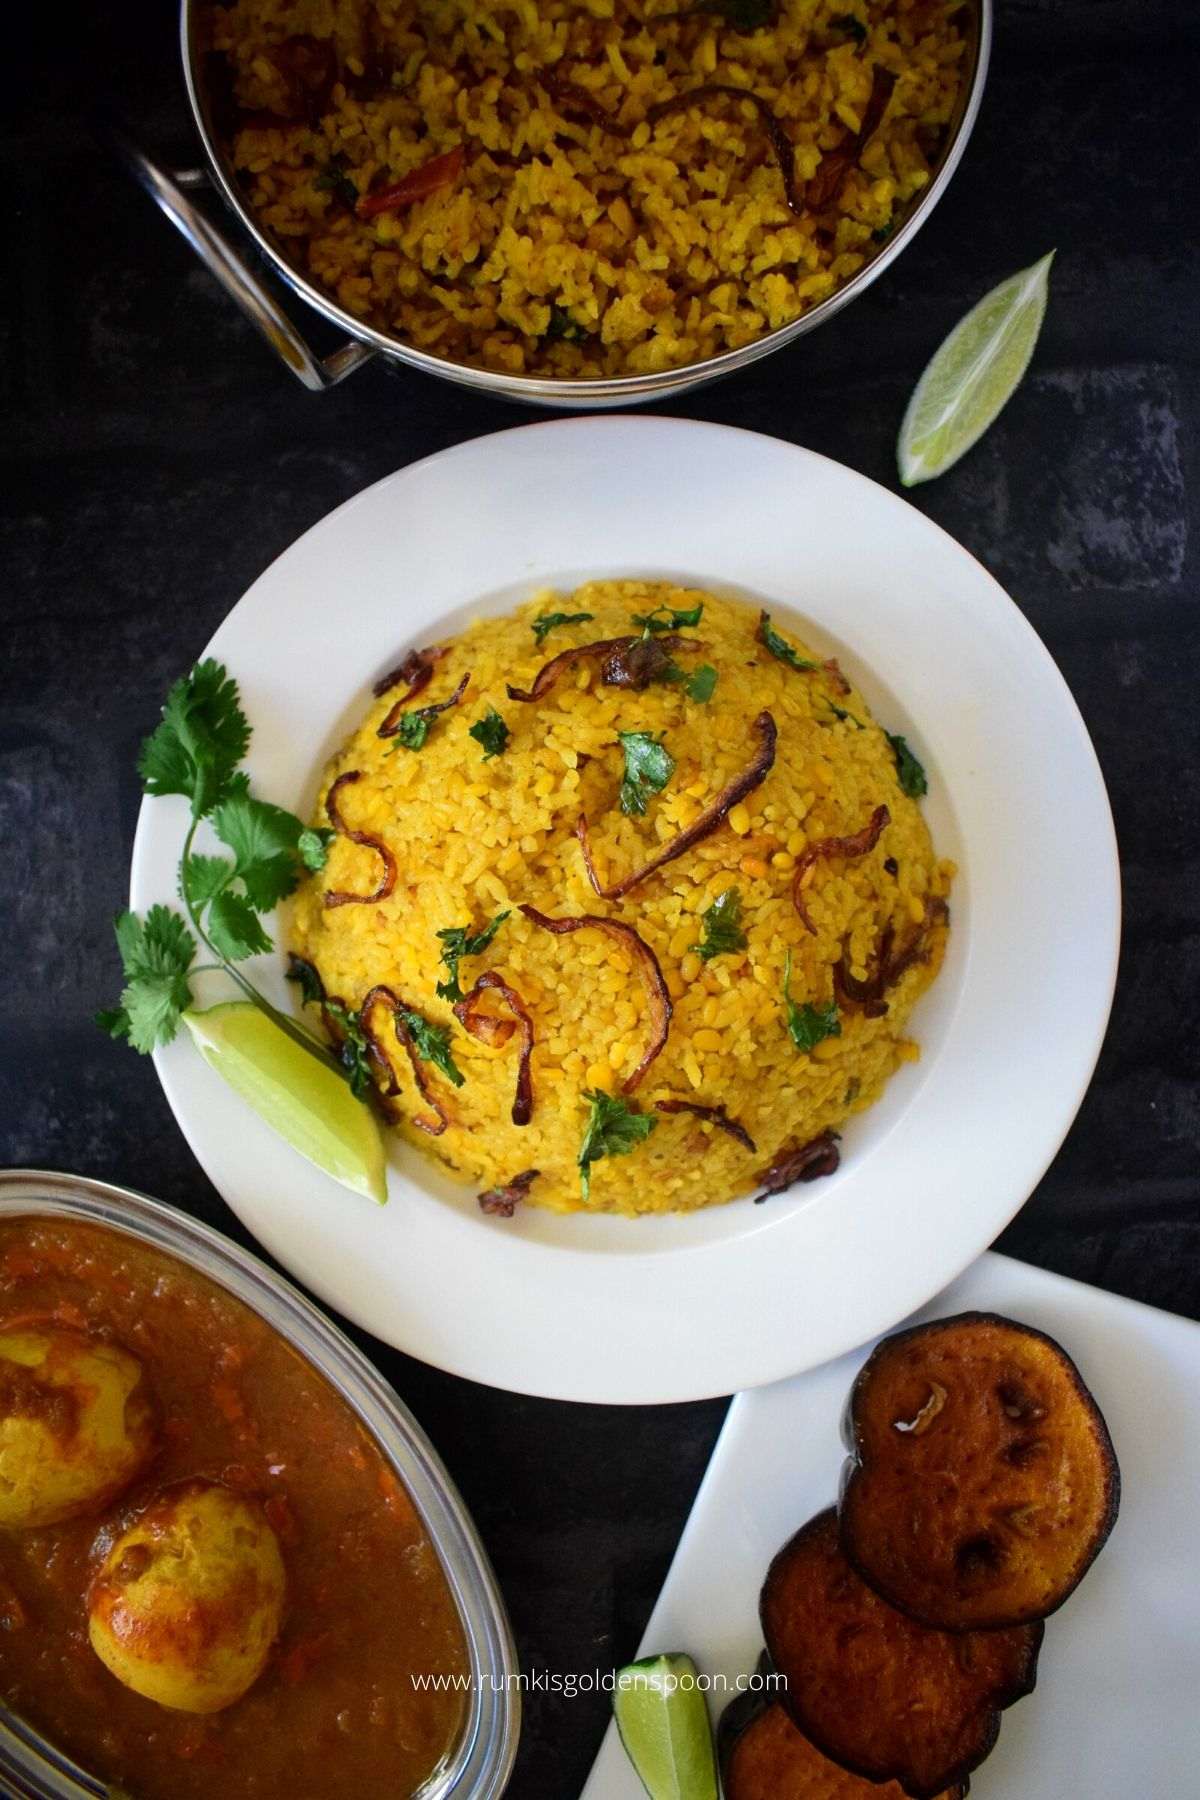 bhuna khichuri, bhuna khichuri recipe, bhuni khichuri, bhuna khichuri recipe bengali, bhuni khichuri recipe, how to make bhuna khichuri, bhuna khichuri ranna, bhuna khichuri bengali recipe, how to cook bhuna khichuri, bhuna khichuri bangladesh, vegetable bhuna khichuri, moong daler bhuna khichuri, mug daler bhuna khichuri, mug daler khichuri, mug daler khichuri recipe, bengali khichuri, bengali khichuri recipe, khichuri bengali recipe, recipe for bengali khichuri, bengali recipe, bengali recipes, bengali food, bengali food recipes, recipes of bengali food, traditional bengali food, Rumki's Golden Spoon